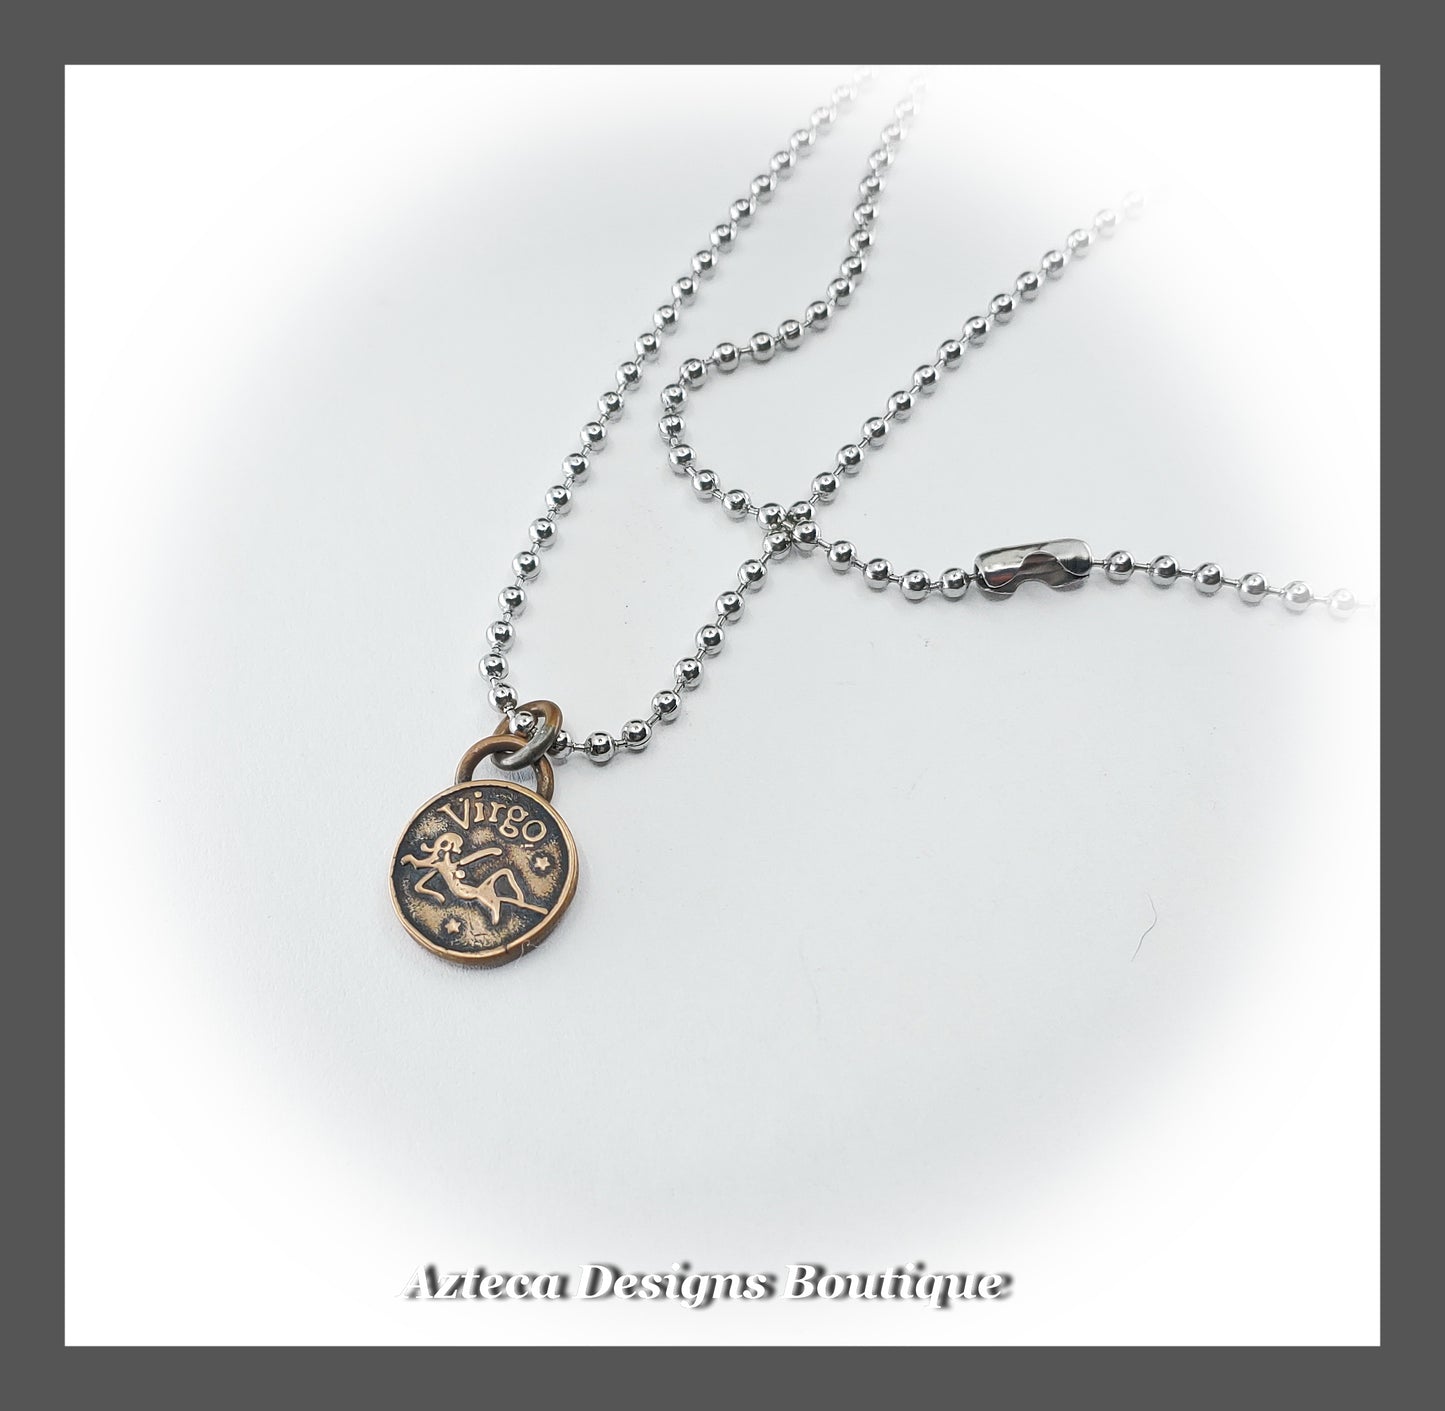 VIRGO Zodiac Sign + Bronze Handmade Charm